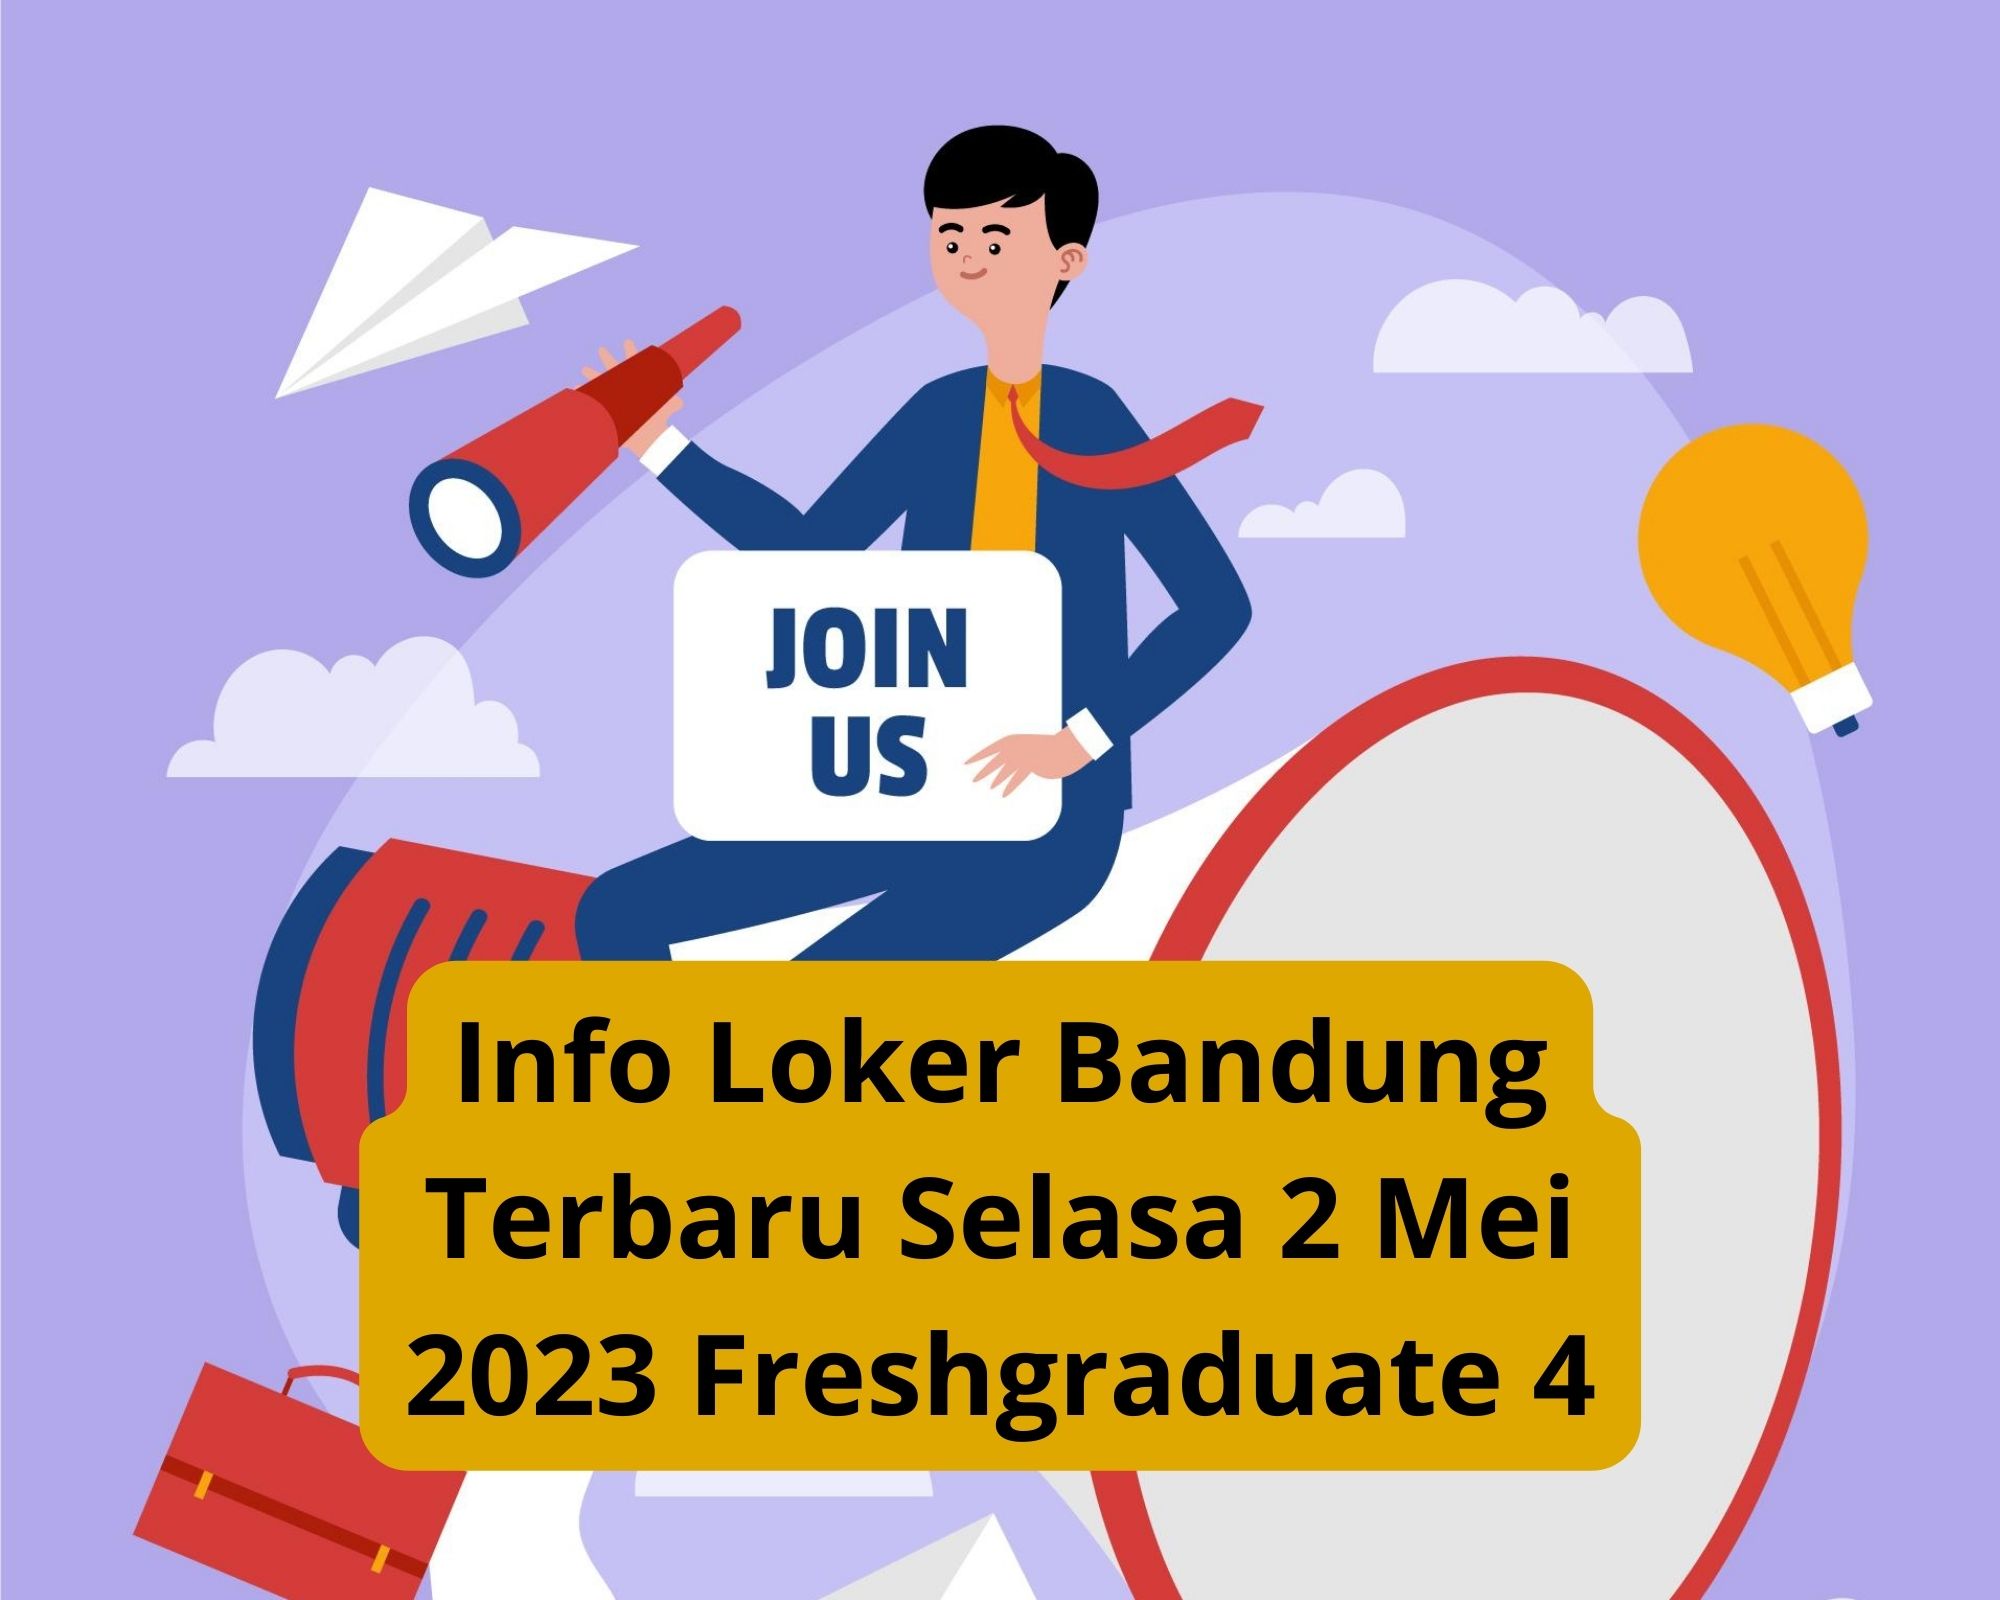 Info Loker Bandung Terbaru Selasa 2 Mei 2023 Freshgraduate 4